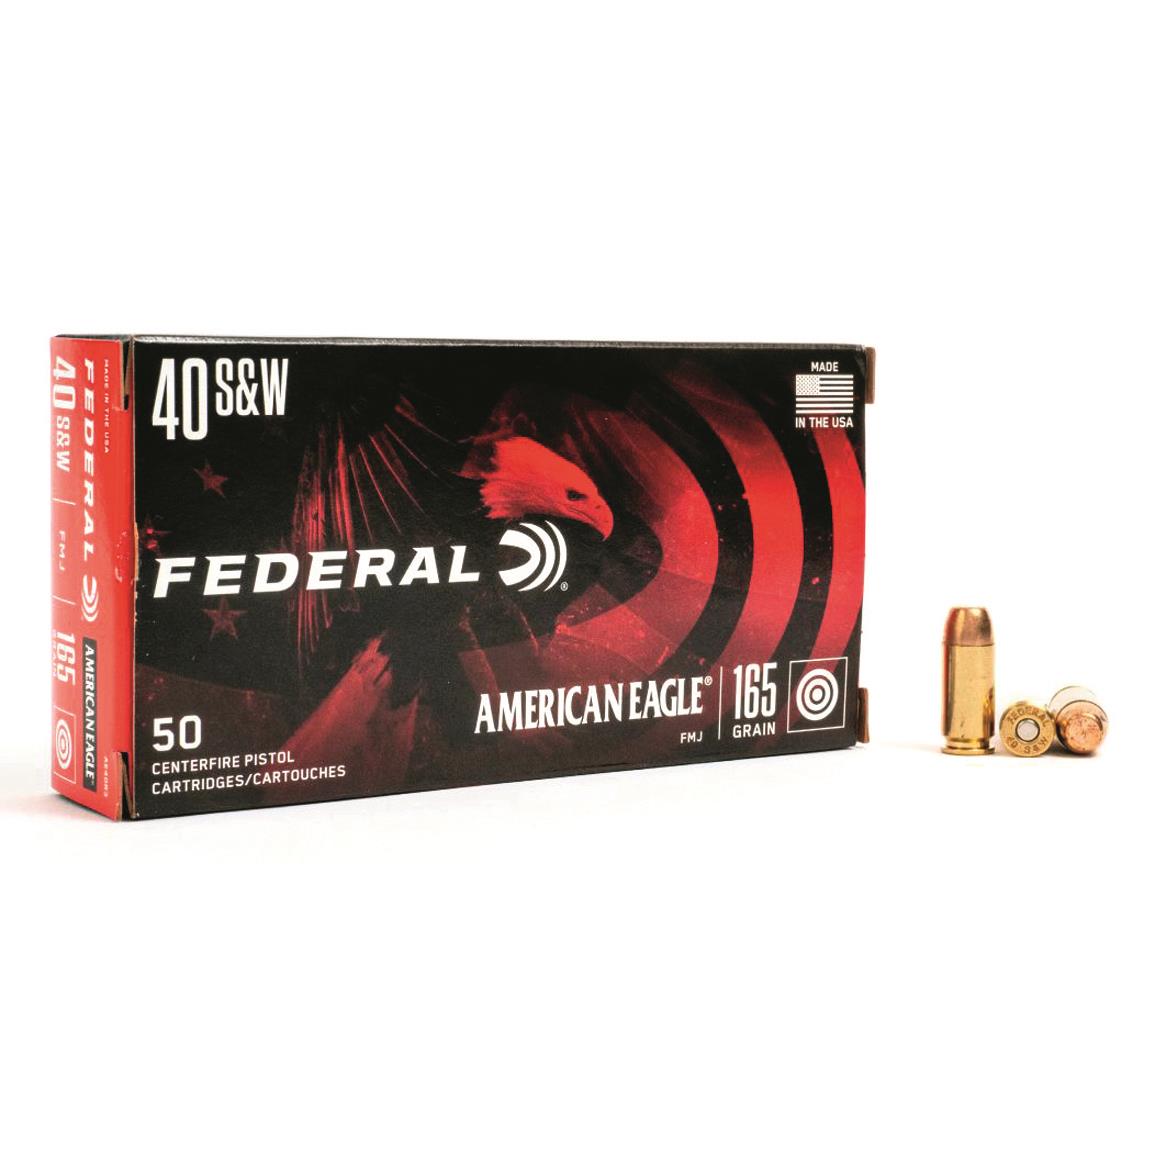 Federal American Eagle, .40 S&W, FMJ, 165 Grain, 500 Rounds